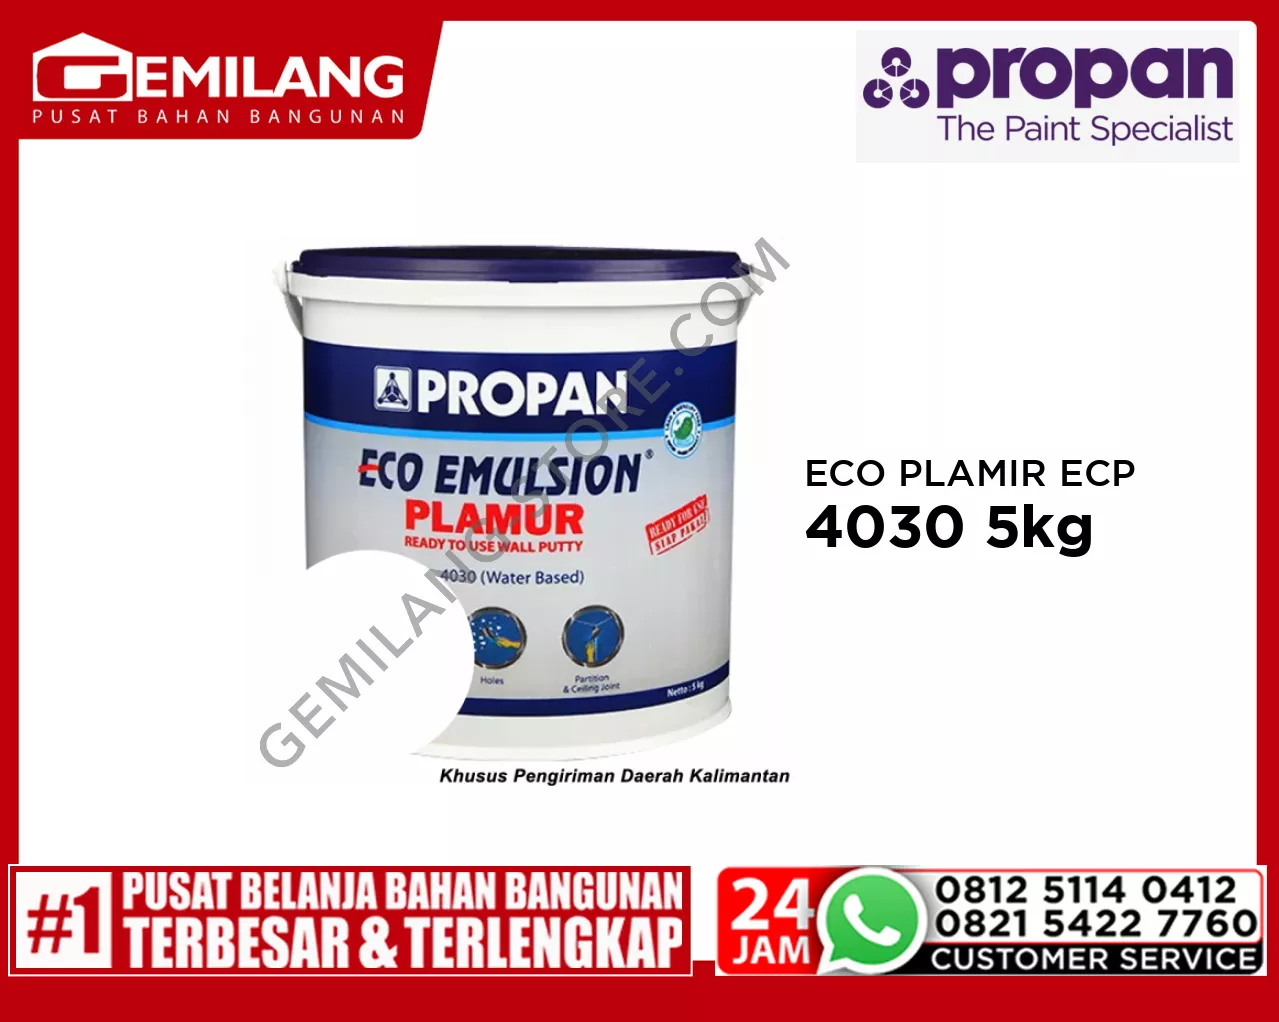 PROPAN ECO PLAMIR ECP 4030 5kg